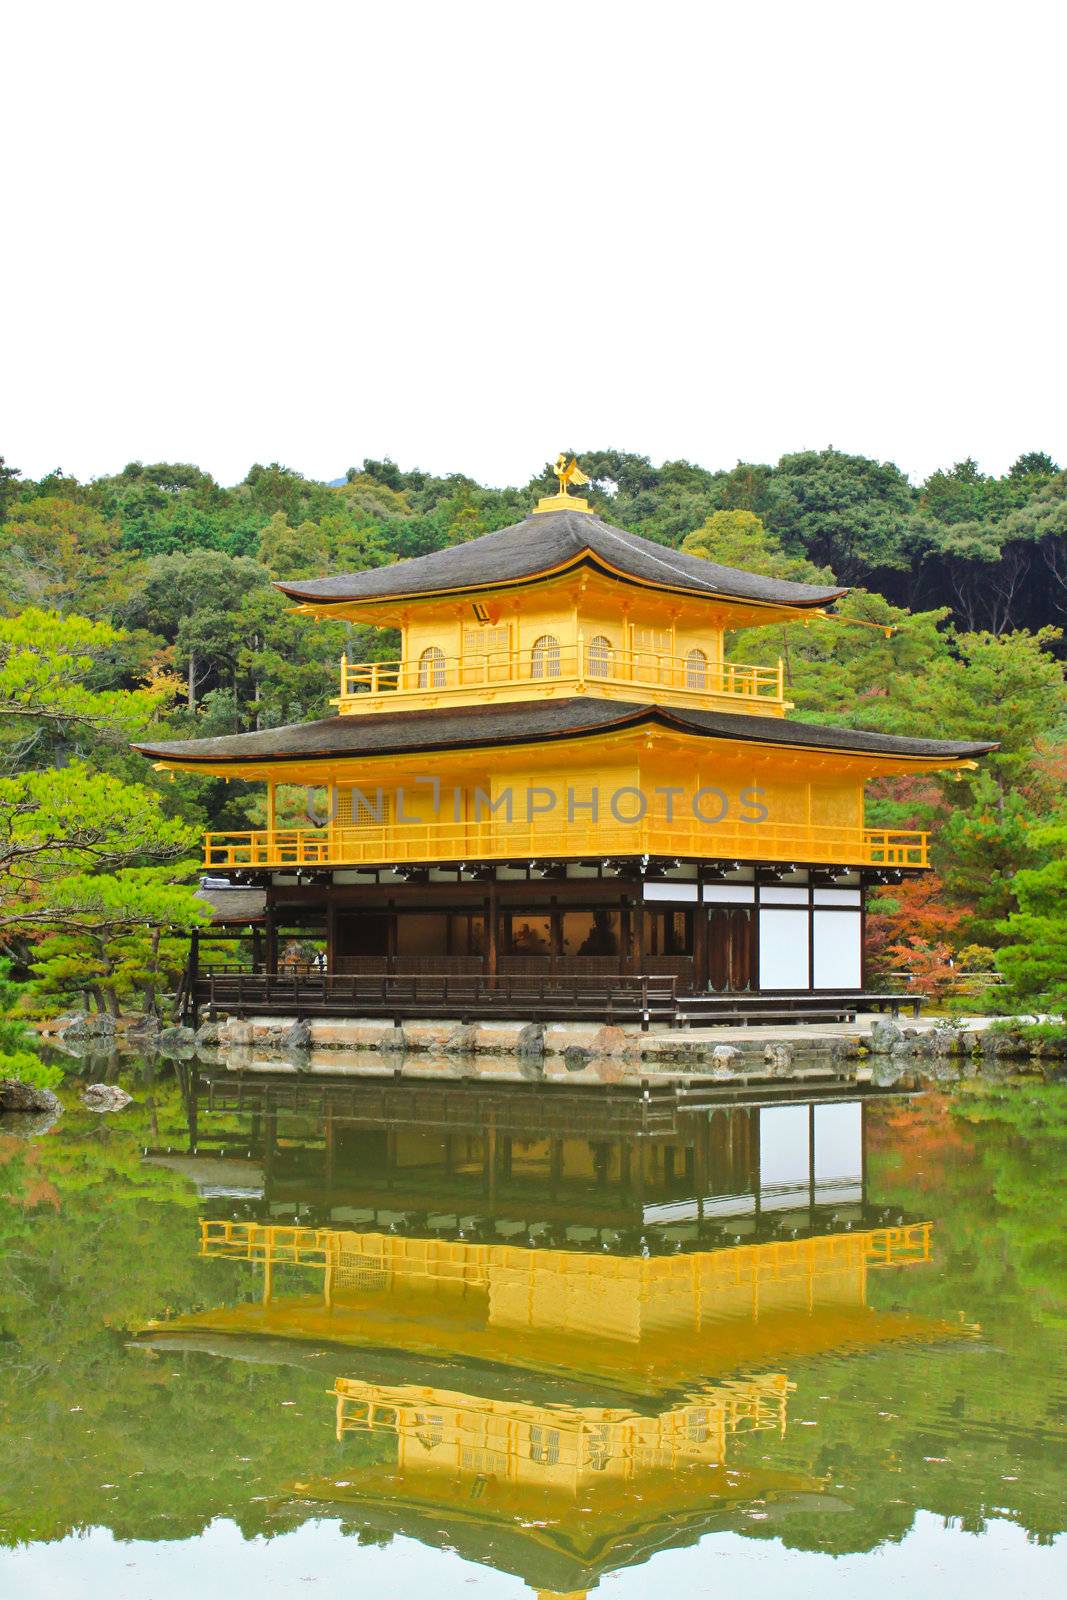 Kinkakuji Temple (The Golden Pavilion) in Kyoto, Japan  by nuchylee